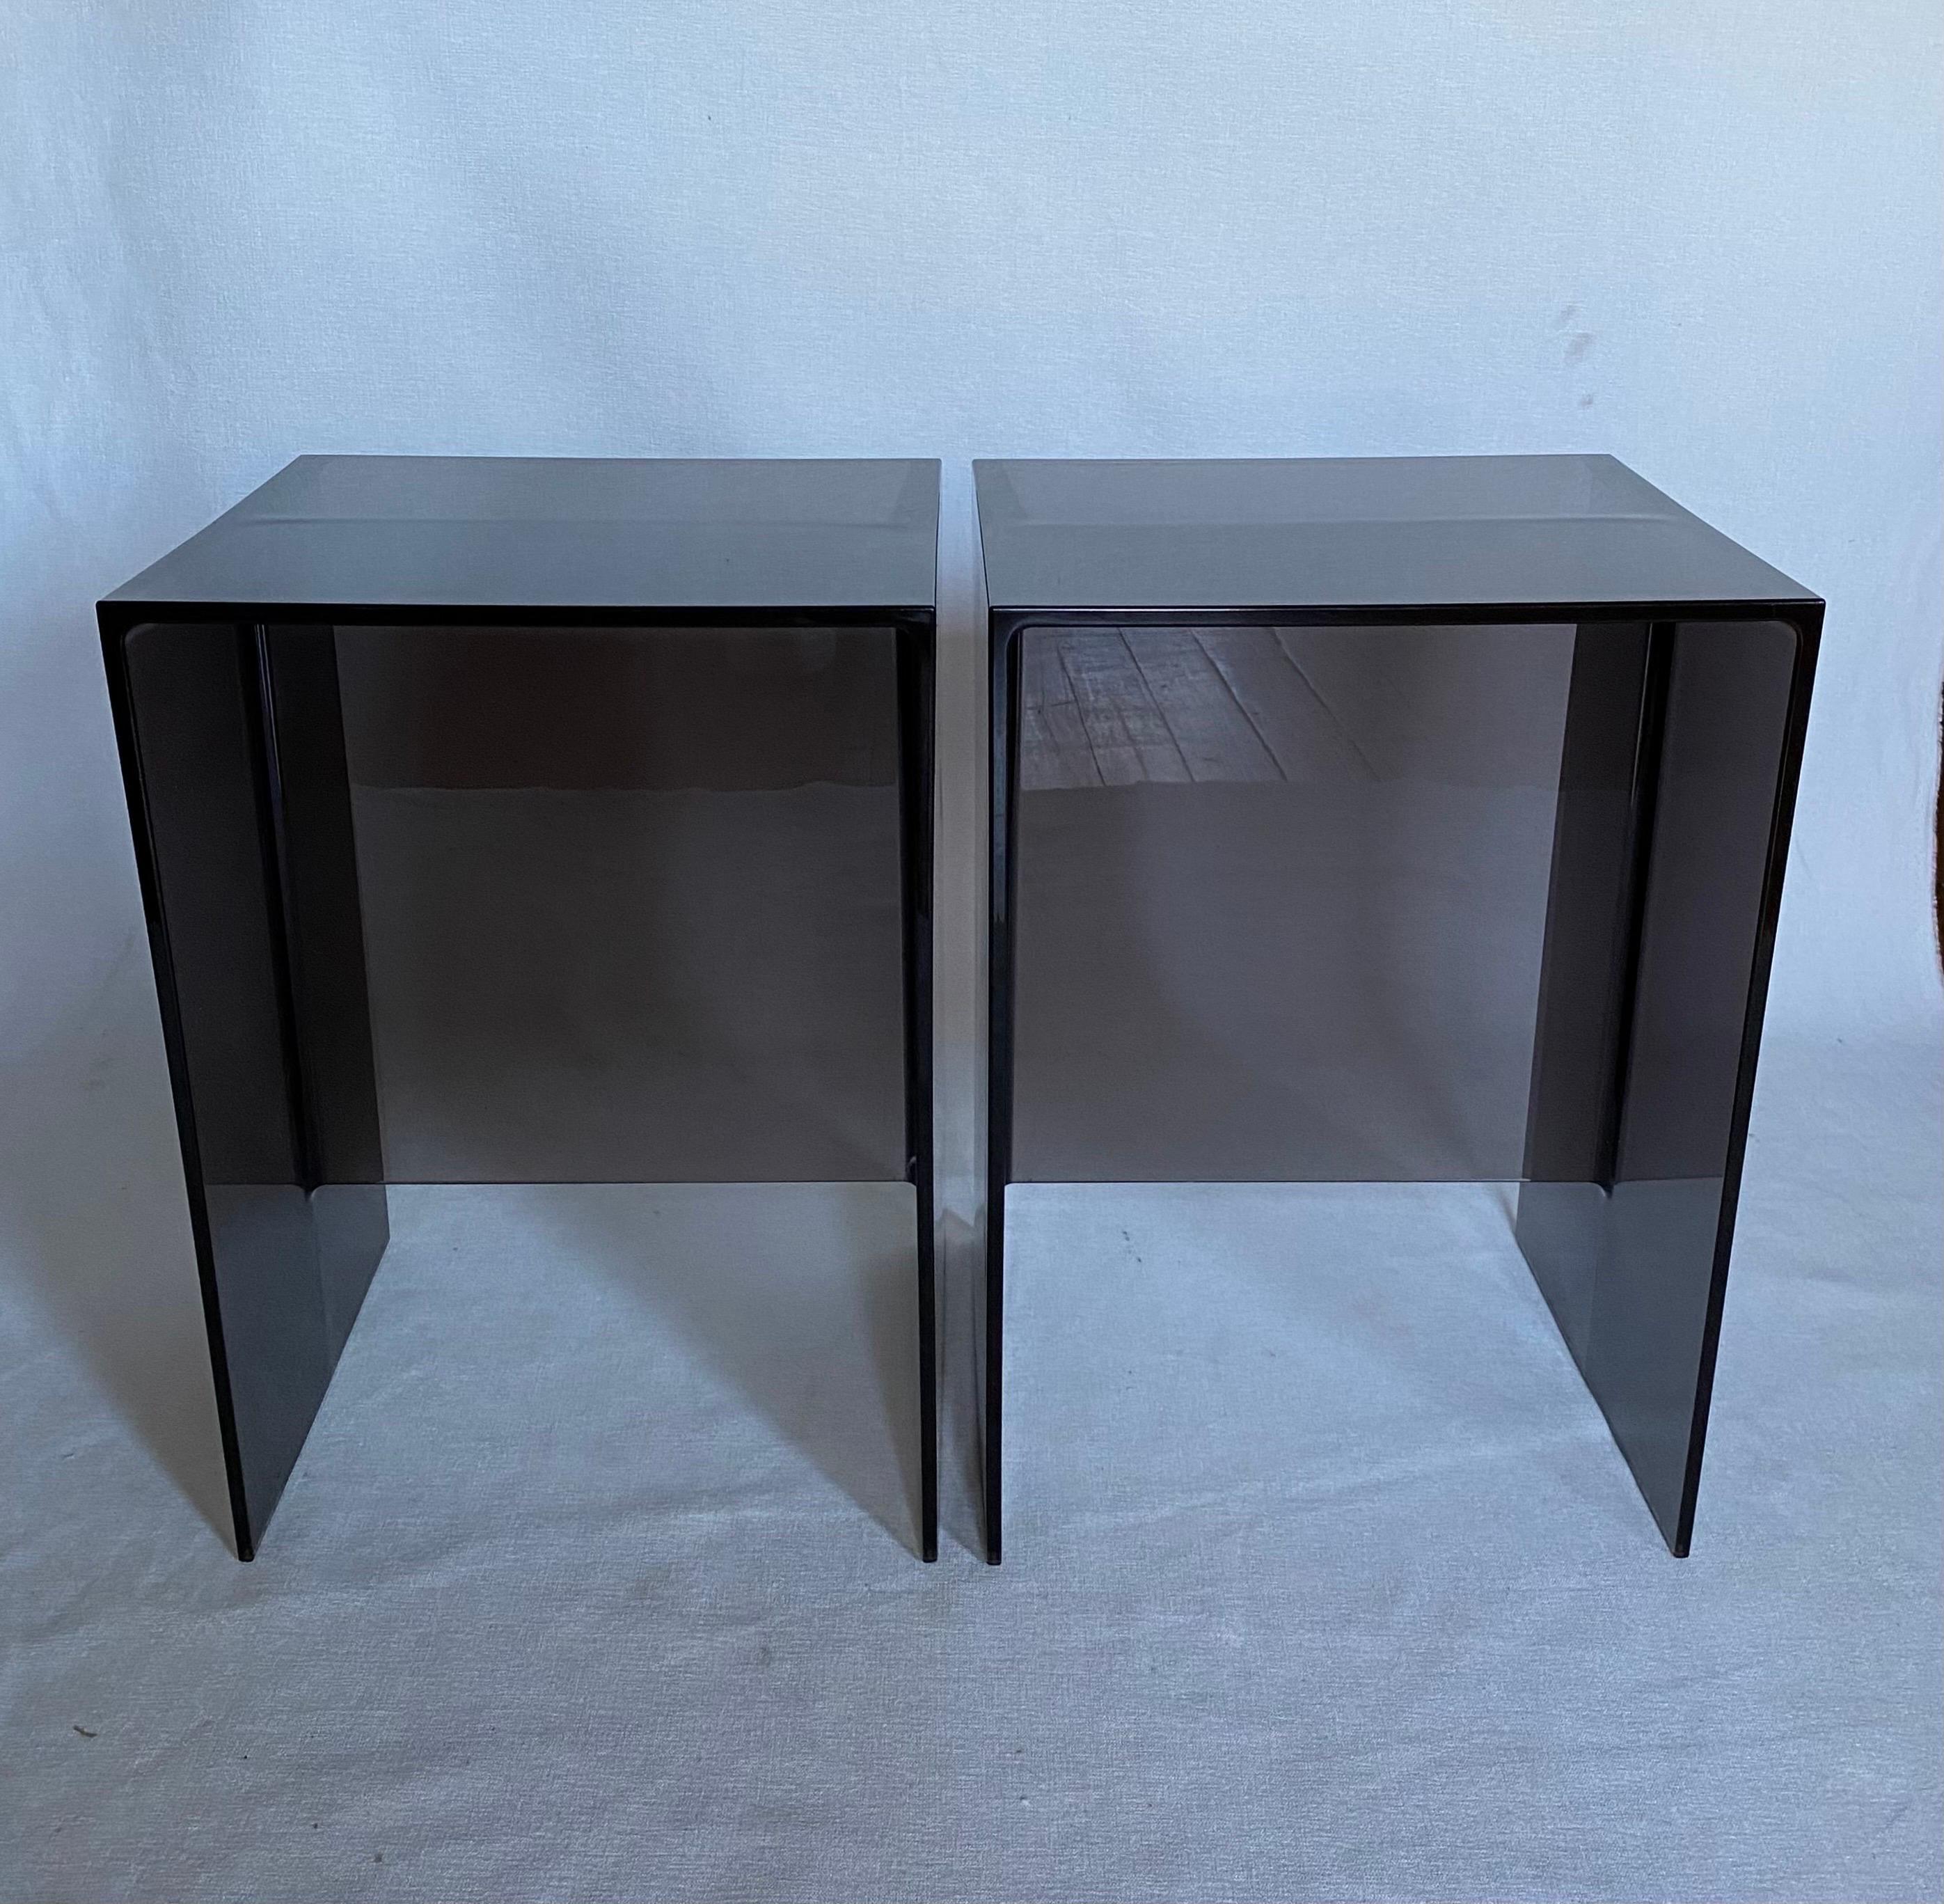 Moderne Tables d'appoint Kartell modernes en acrylique Max-Beam de Ludovica + Roberto Palomb, Italie en vente